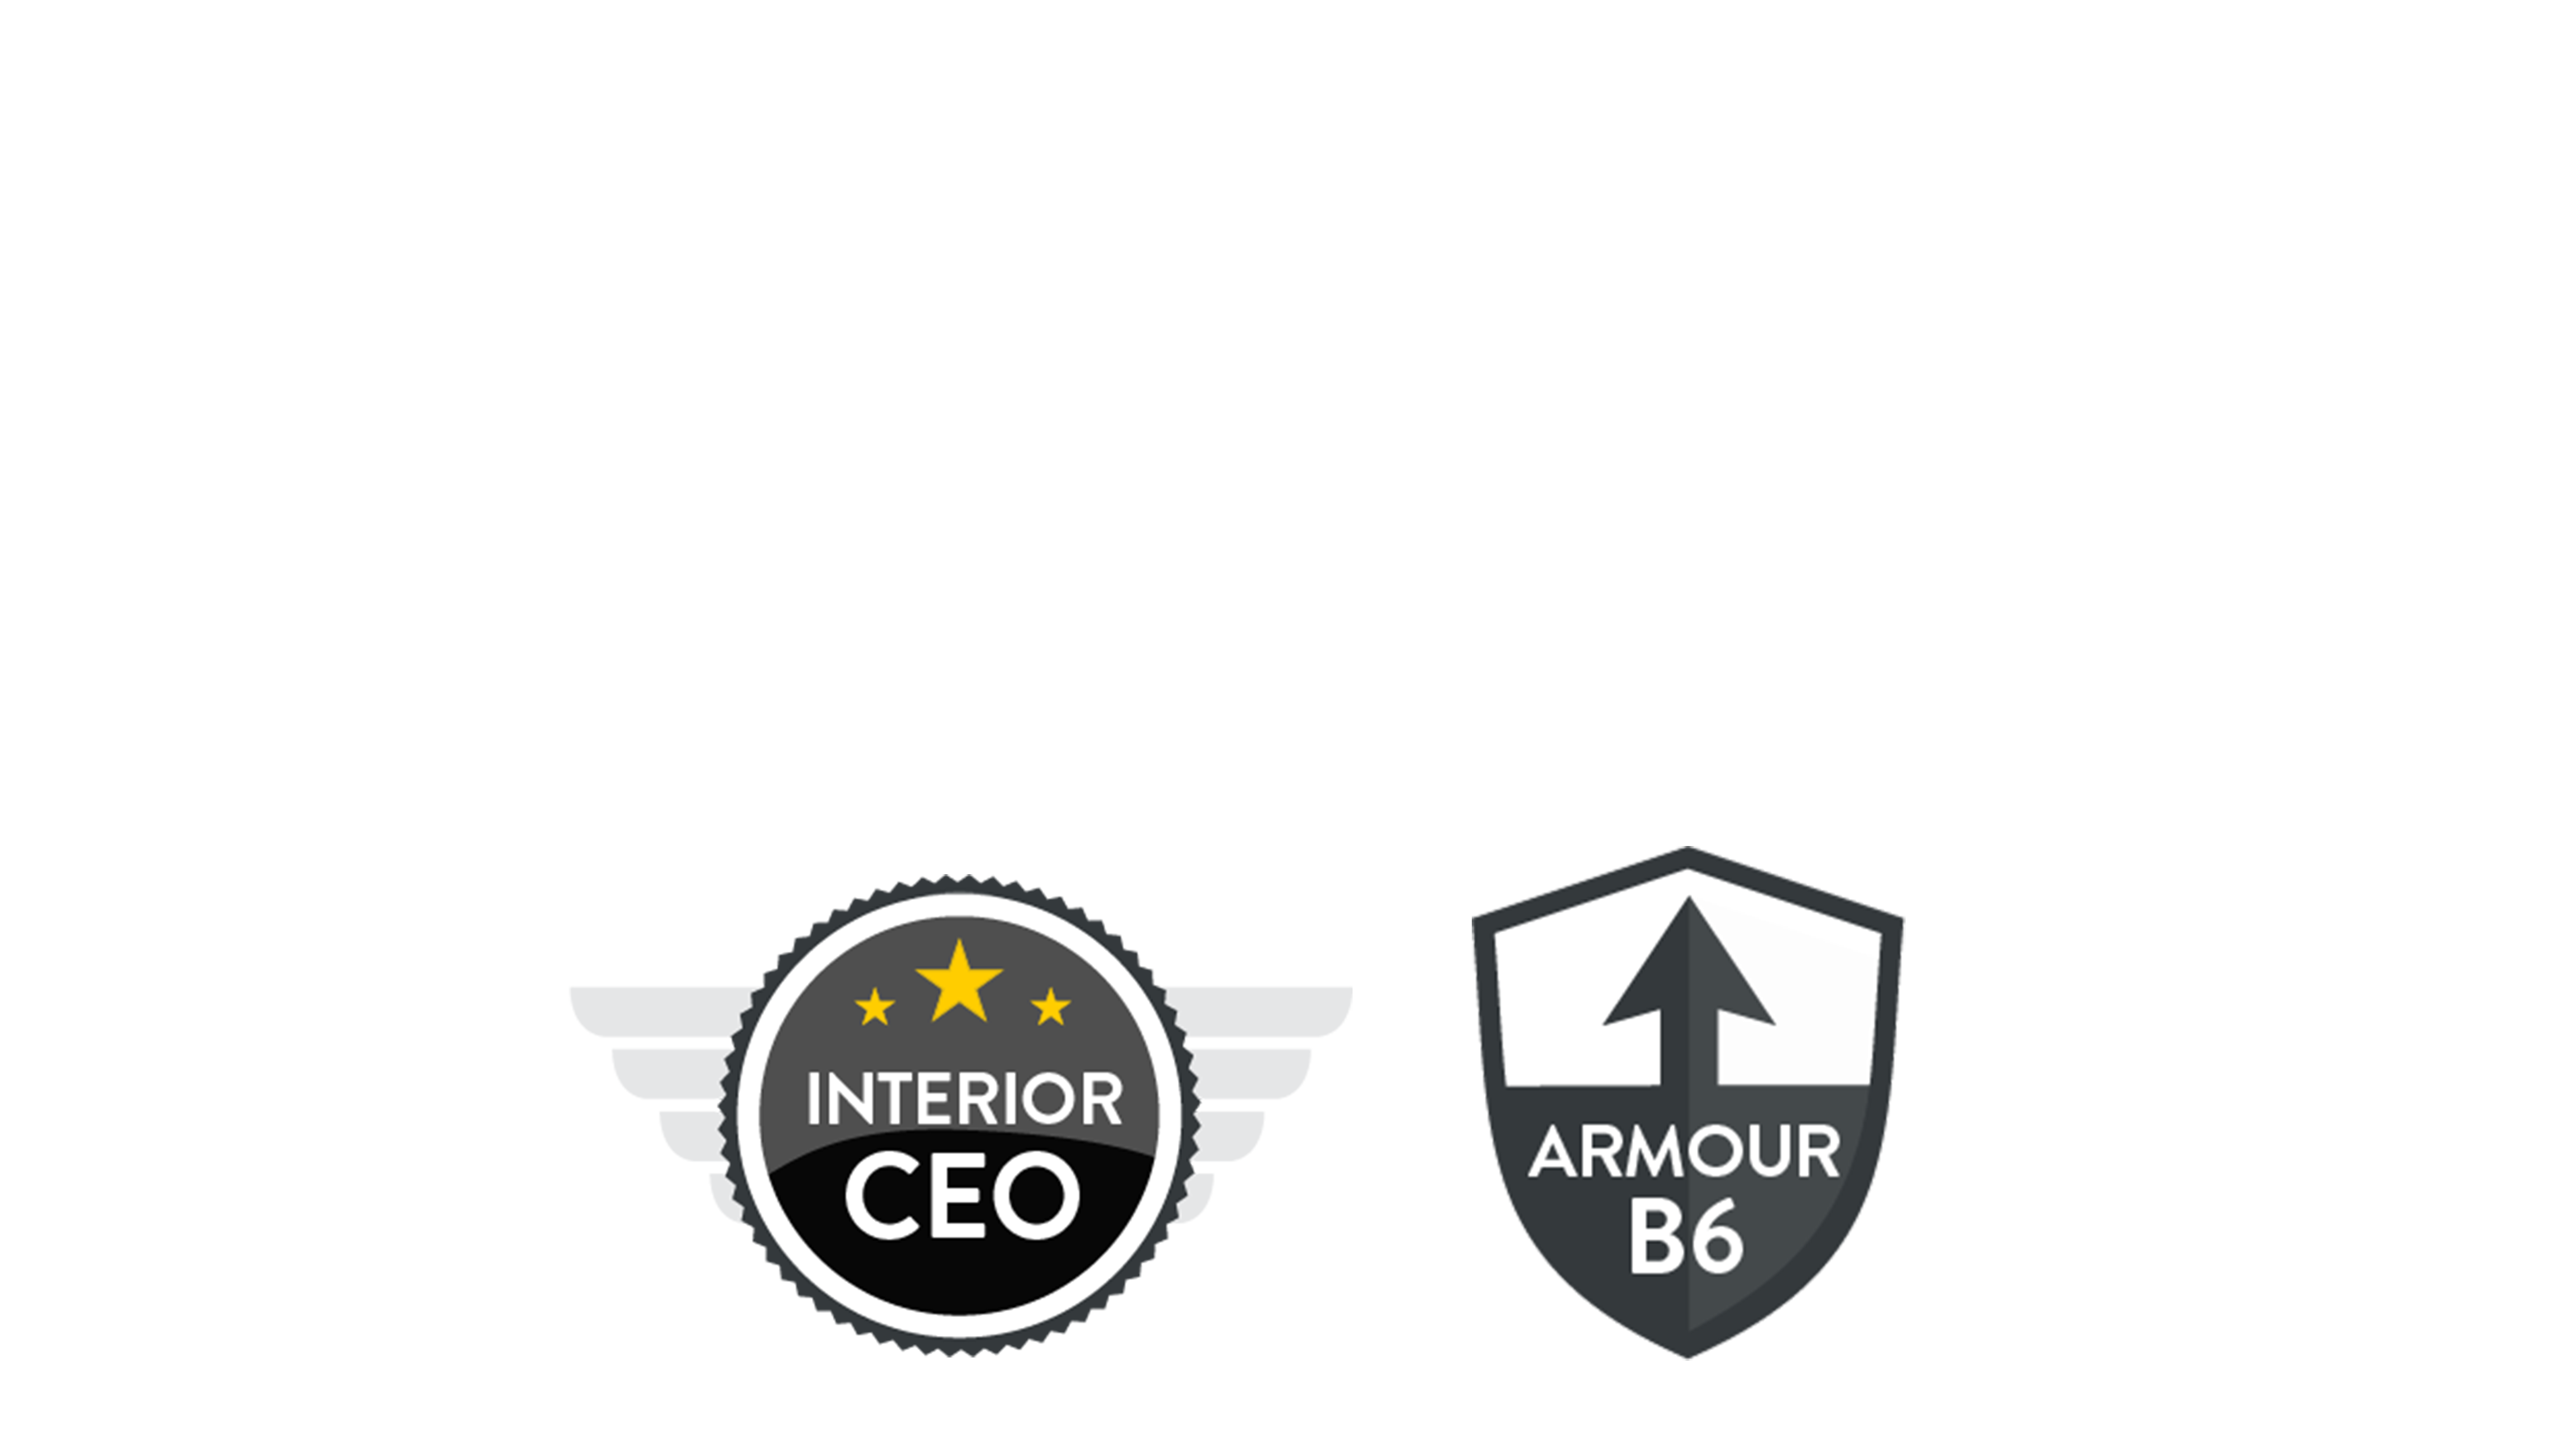 Interior CEO and Armour B6 company logos